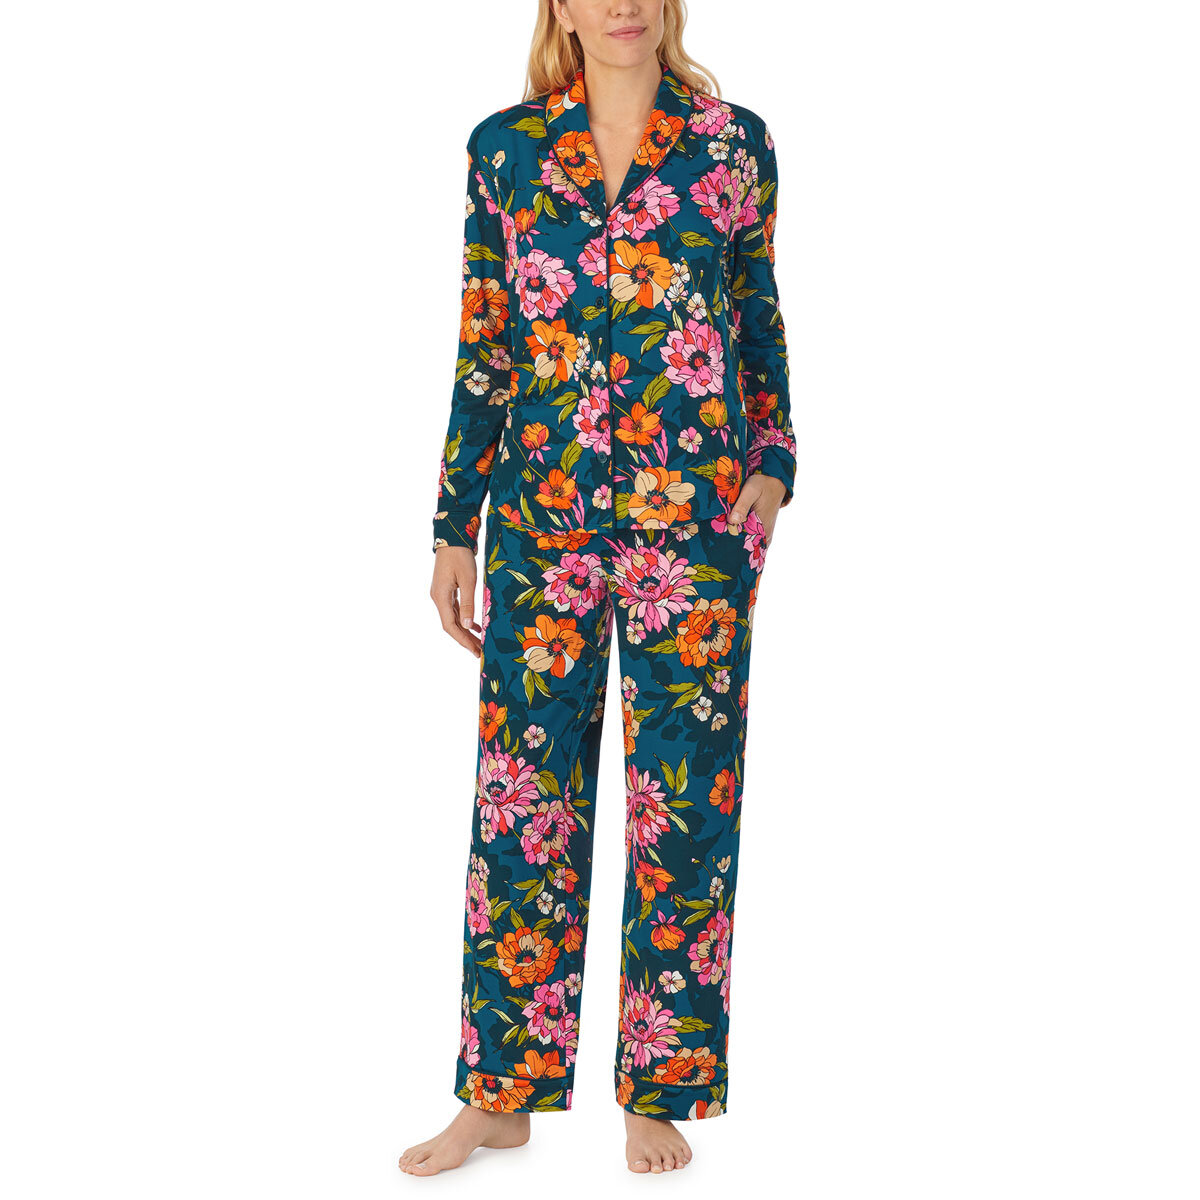 Room Service Ladies Notch Collar PJ Set, 2 Piece in Floral